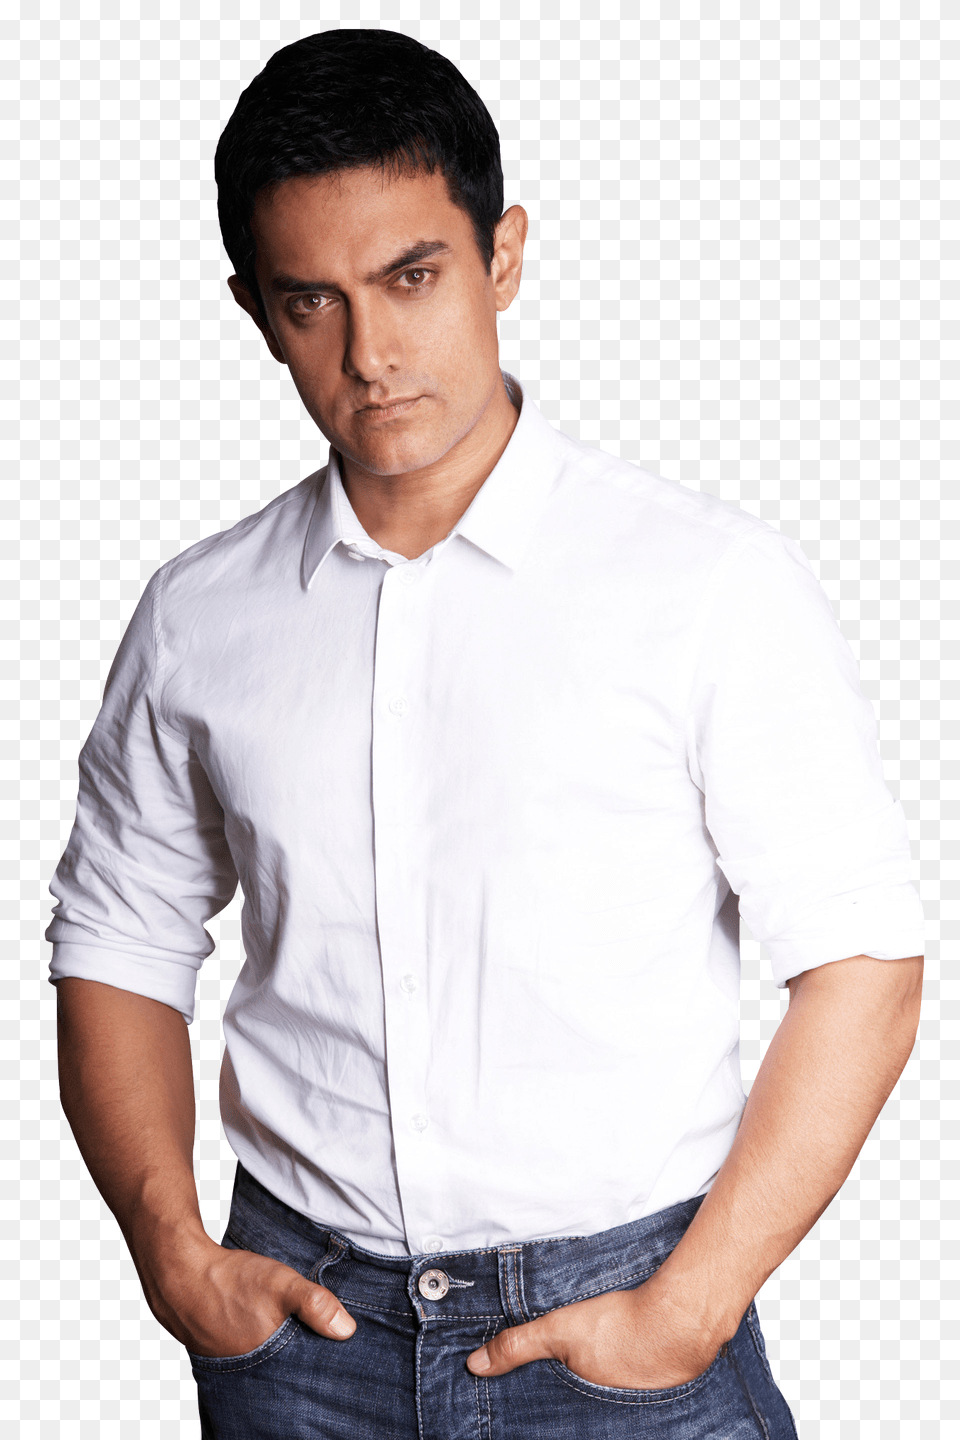 Pngpix Com Aamir Khan Transparent, Clothing, Dress Shirt, Shirt, Adult Png